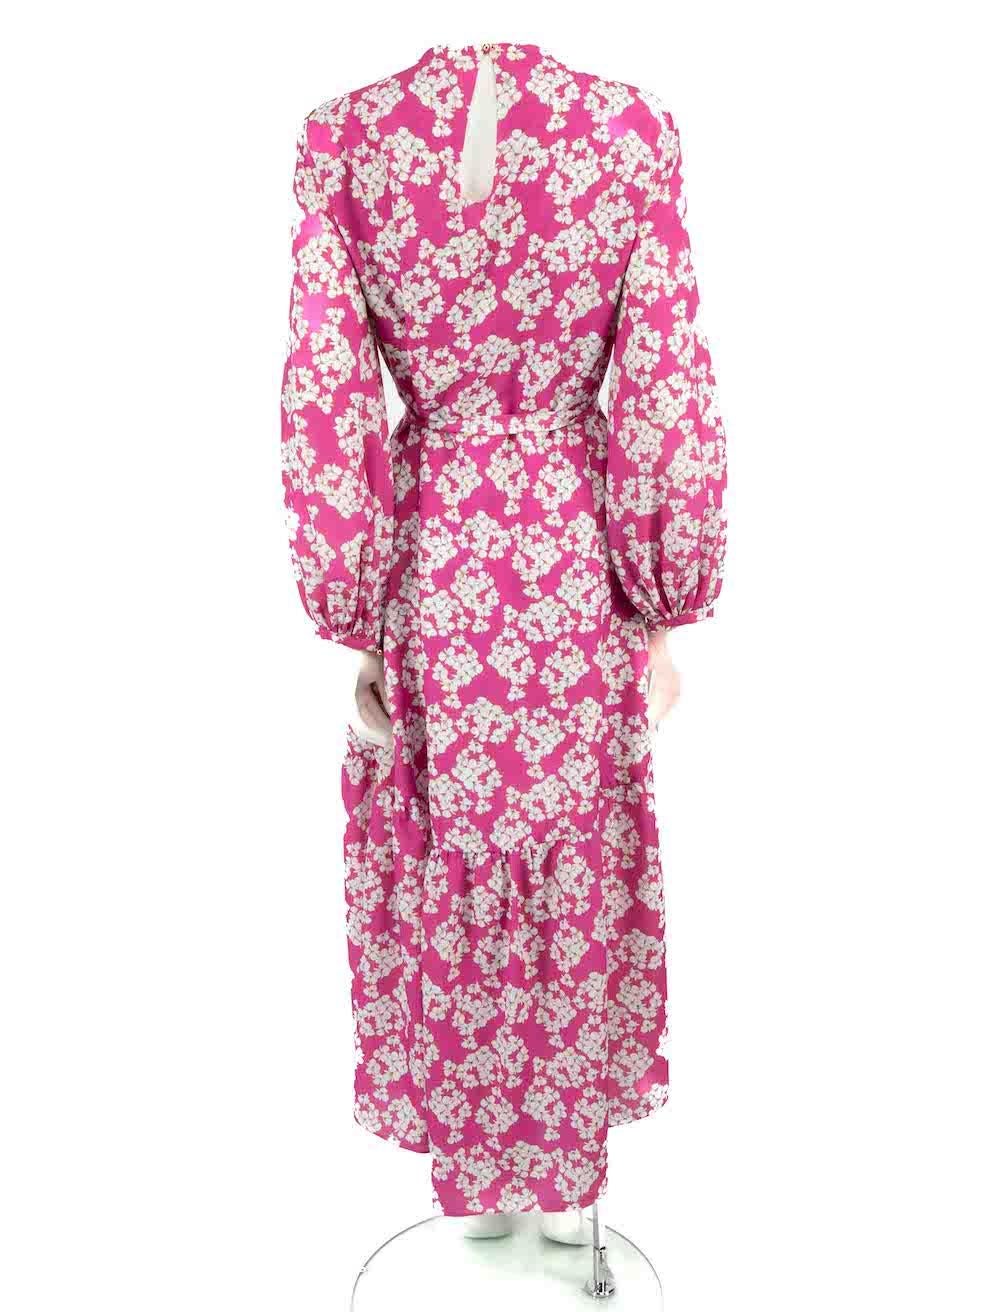 Borgo De Nor Pink Floral Midi Dress Size M In Good Condition For Sale In London, GB